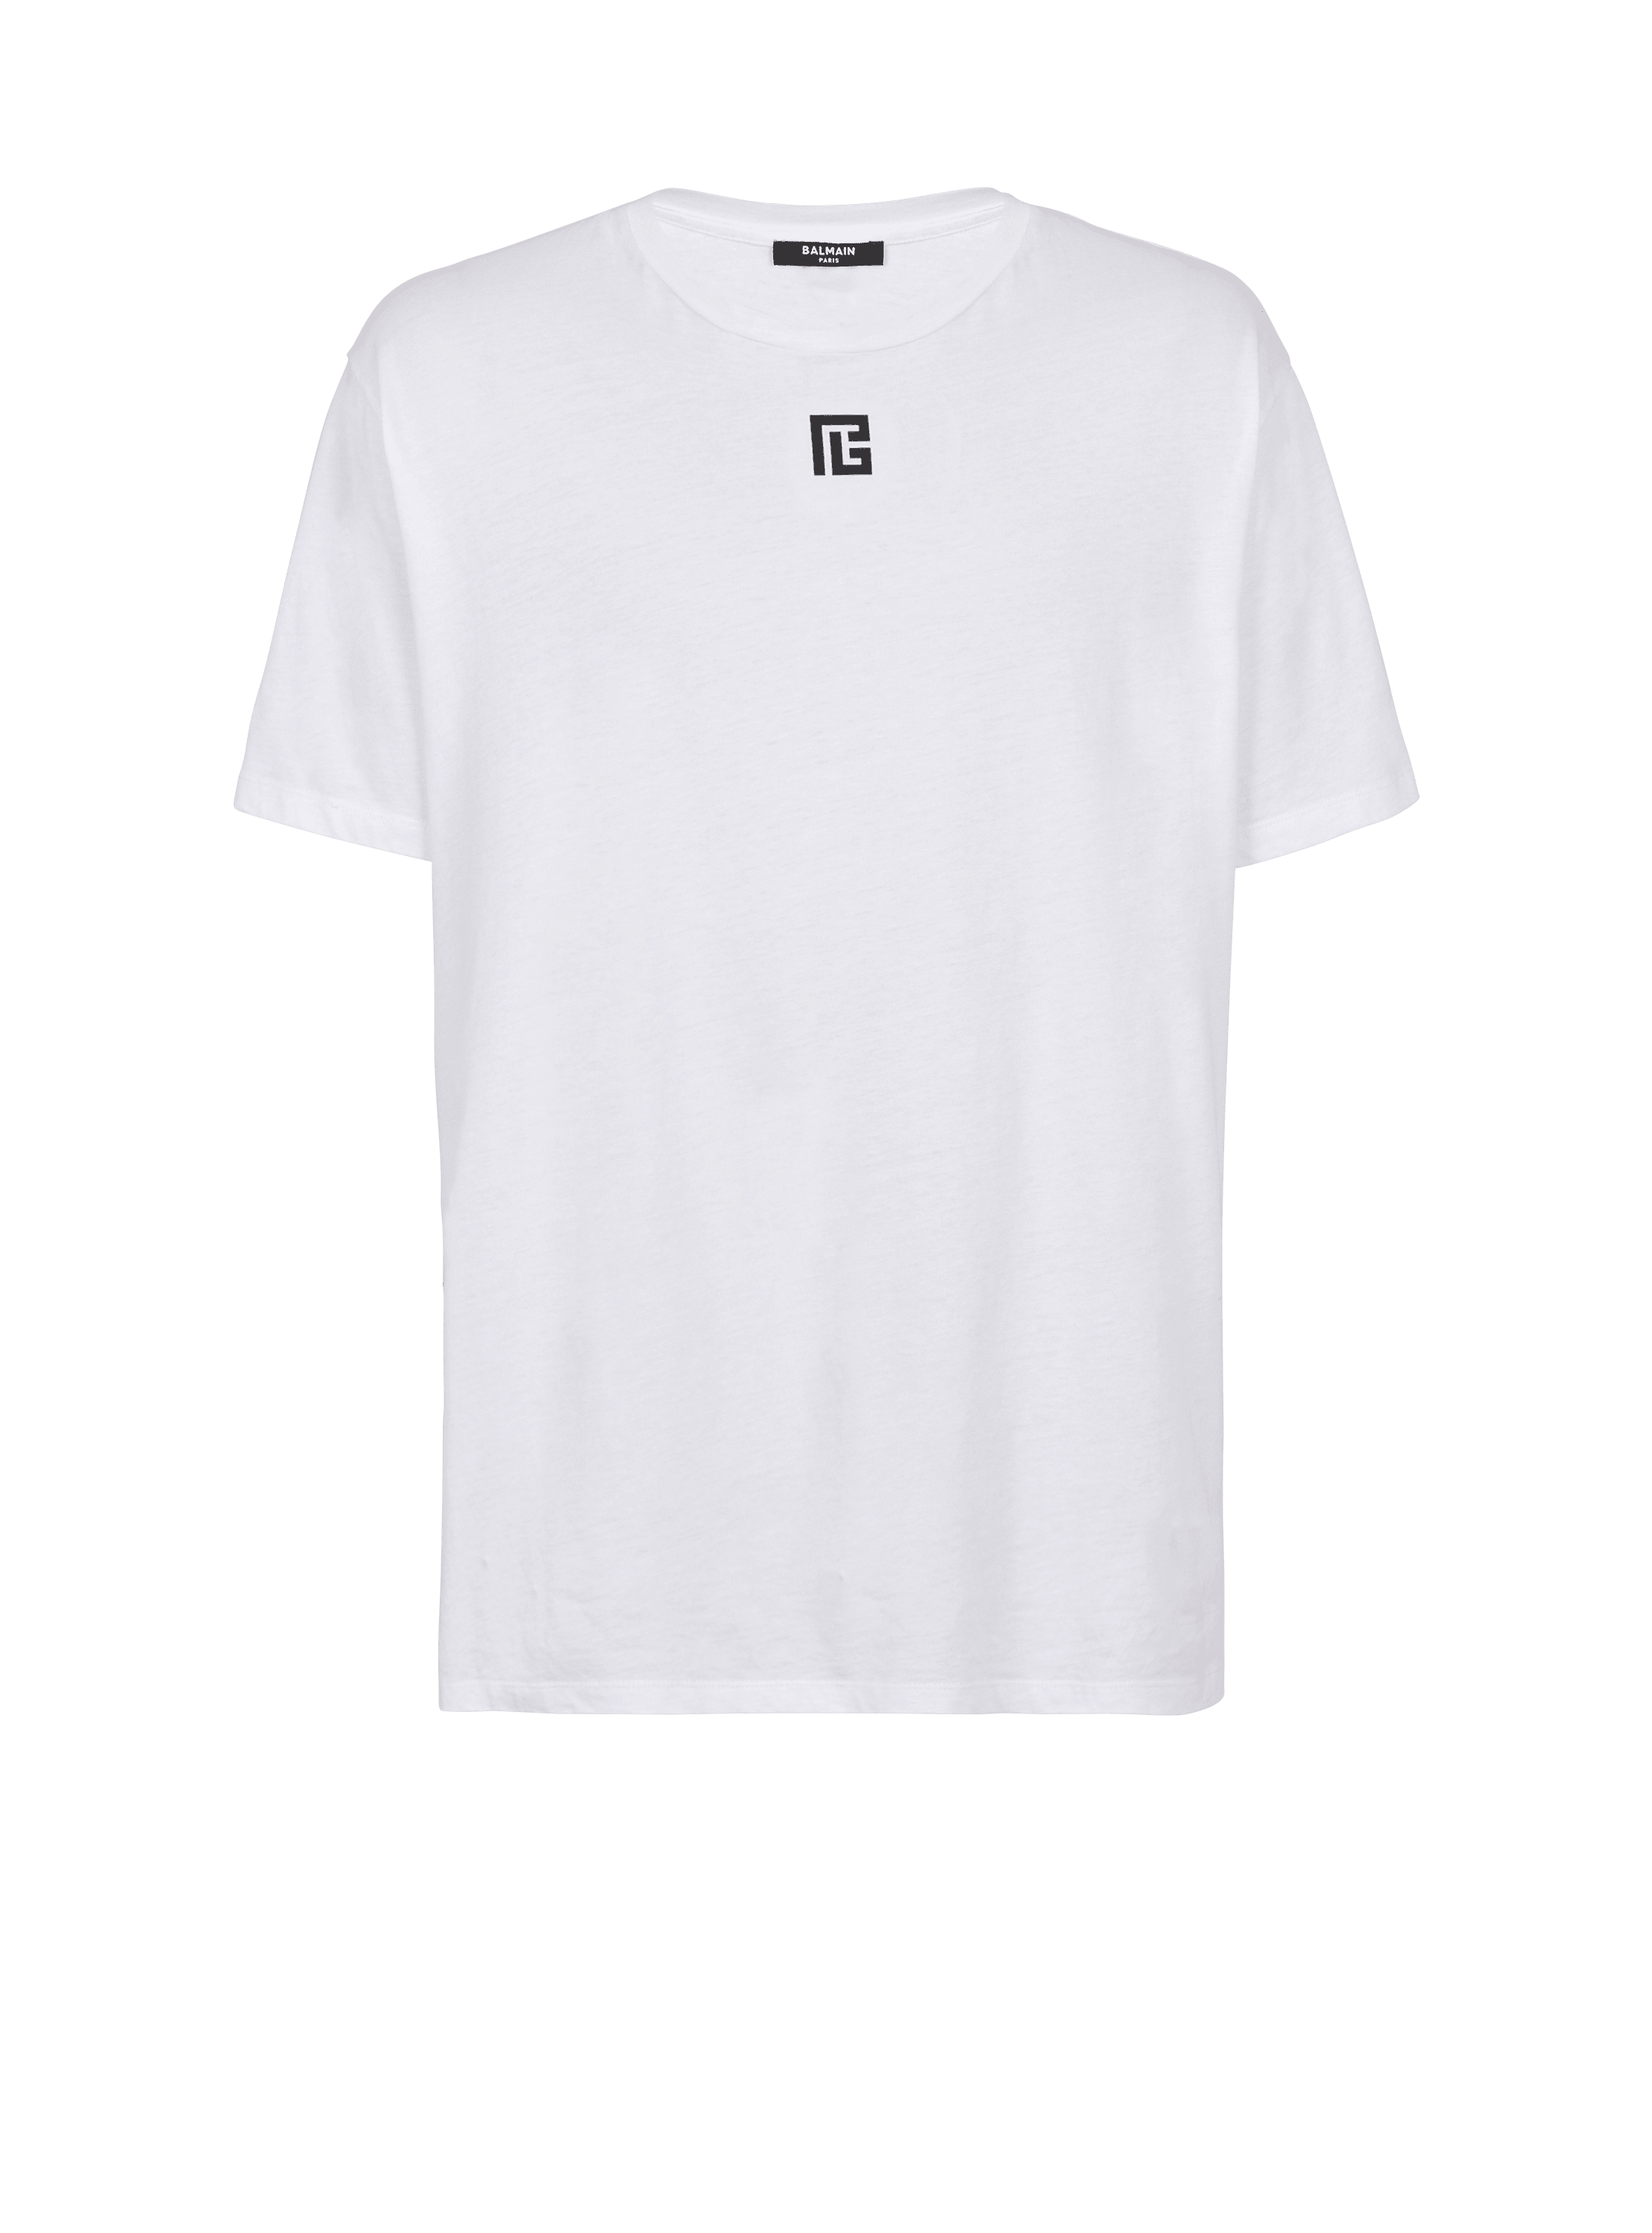 T-shirt oversize in cotone con maxi logo Balmain, bianco, hi-res